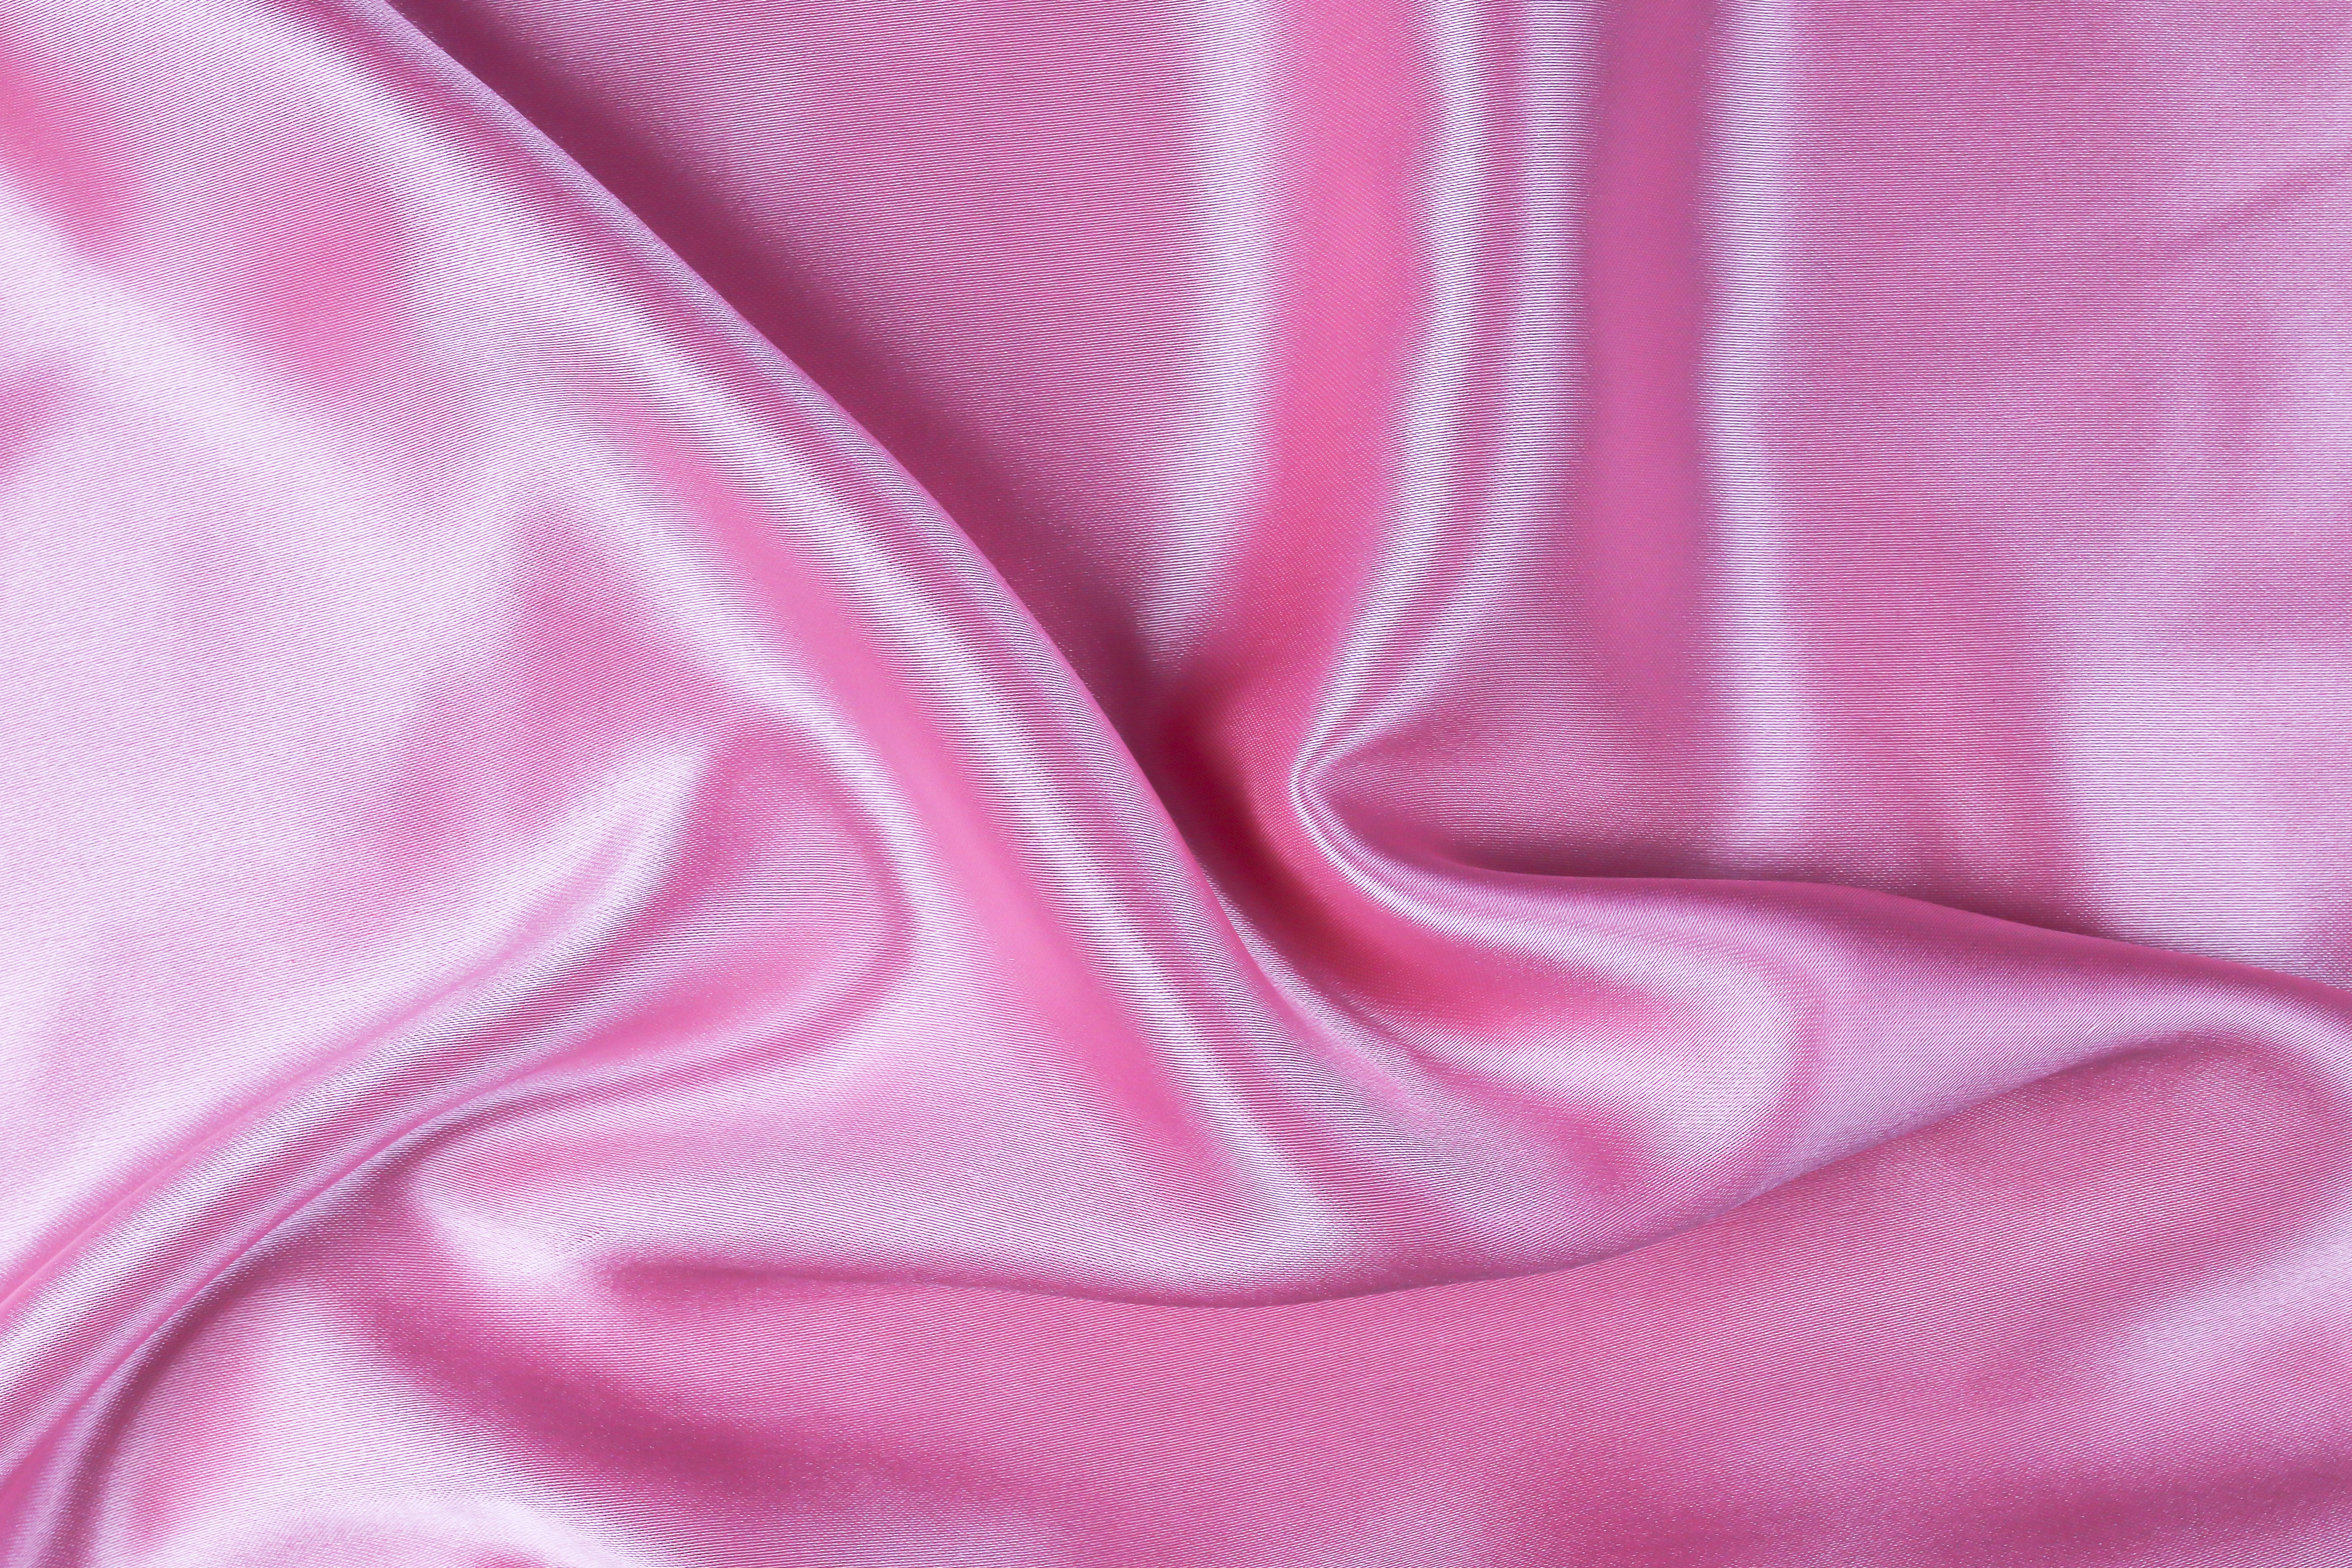 Pink Satin Wallpapers